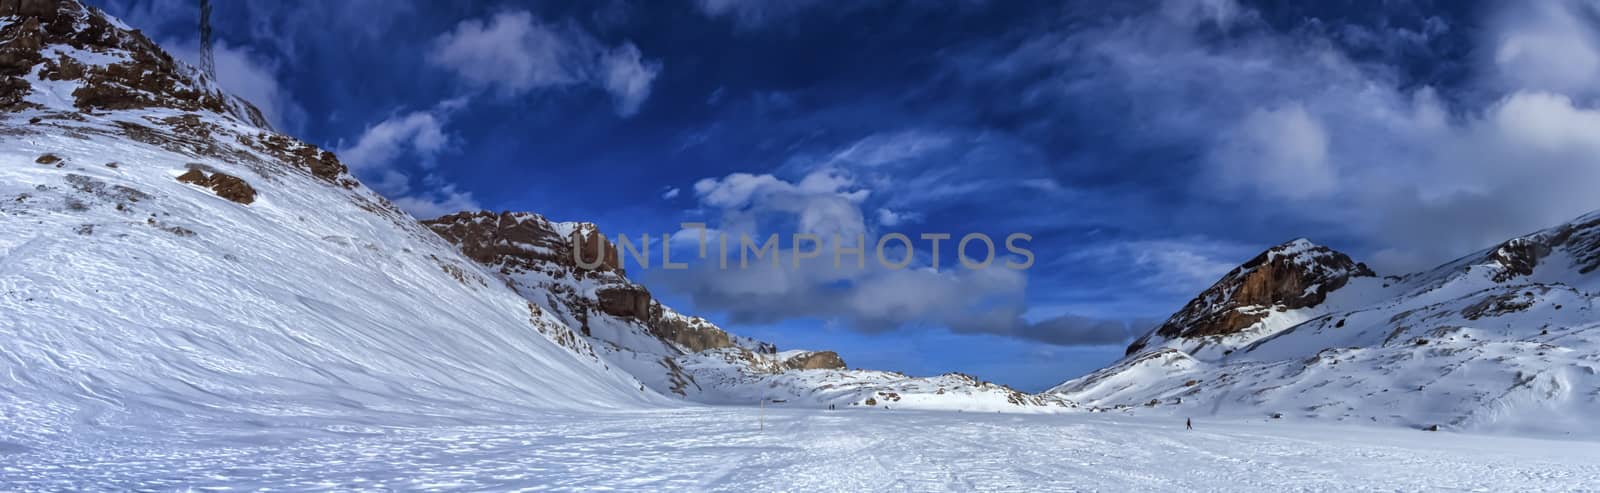 Valais Alps mountains upon Leukerbad, Switzerland by Elenaphotos21